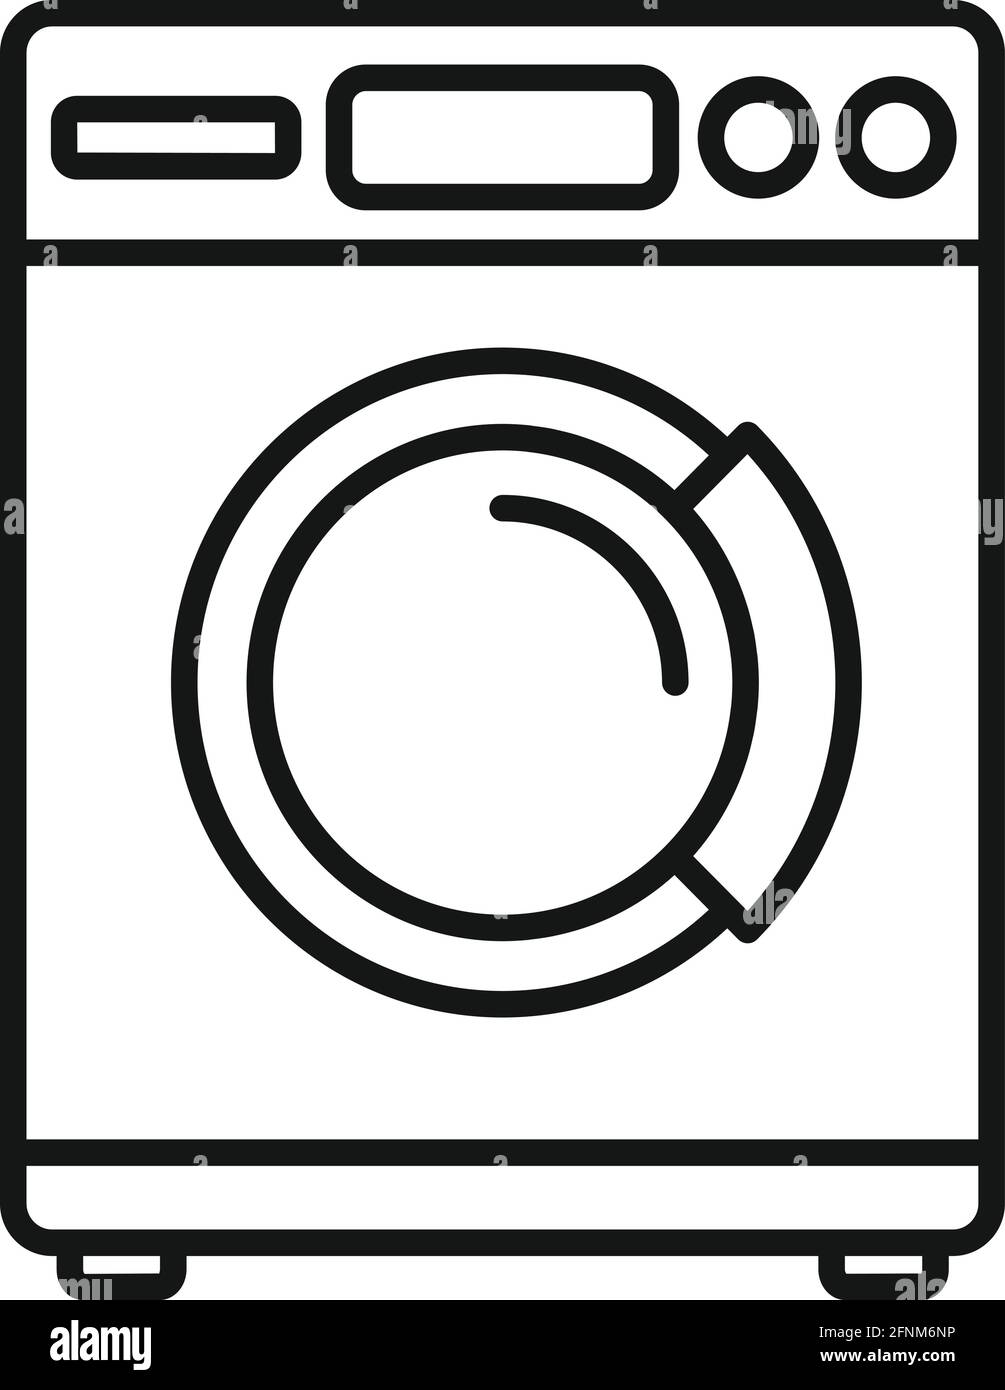 Symbol für Wäschetrockner, Umrissstil Stock-Vektorgrafik - Alamy